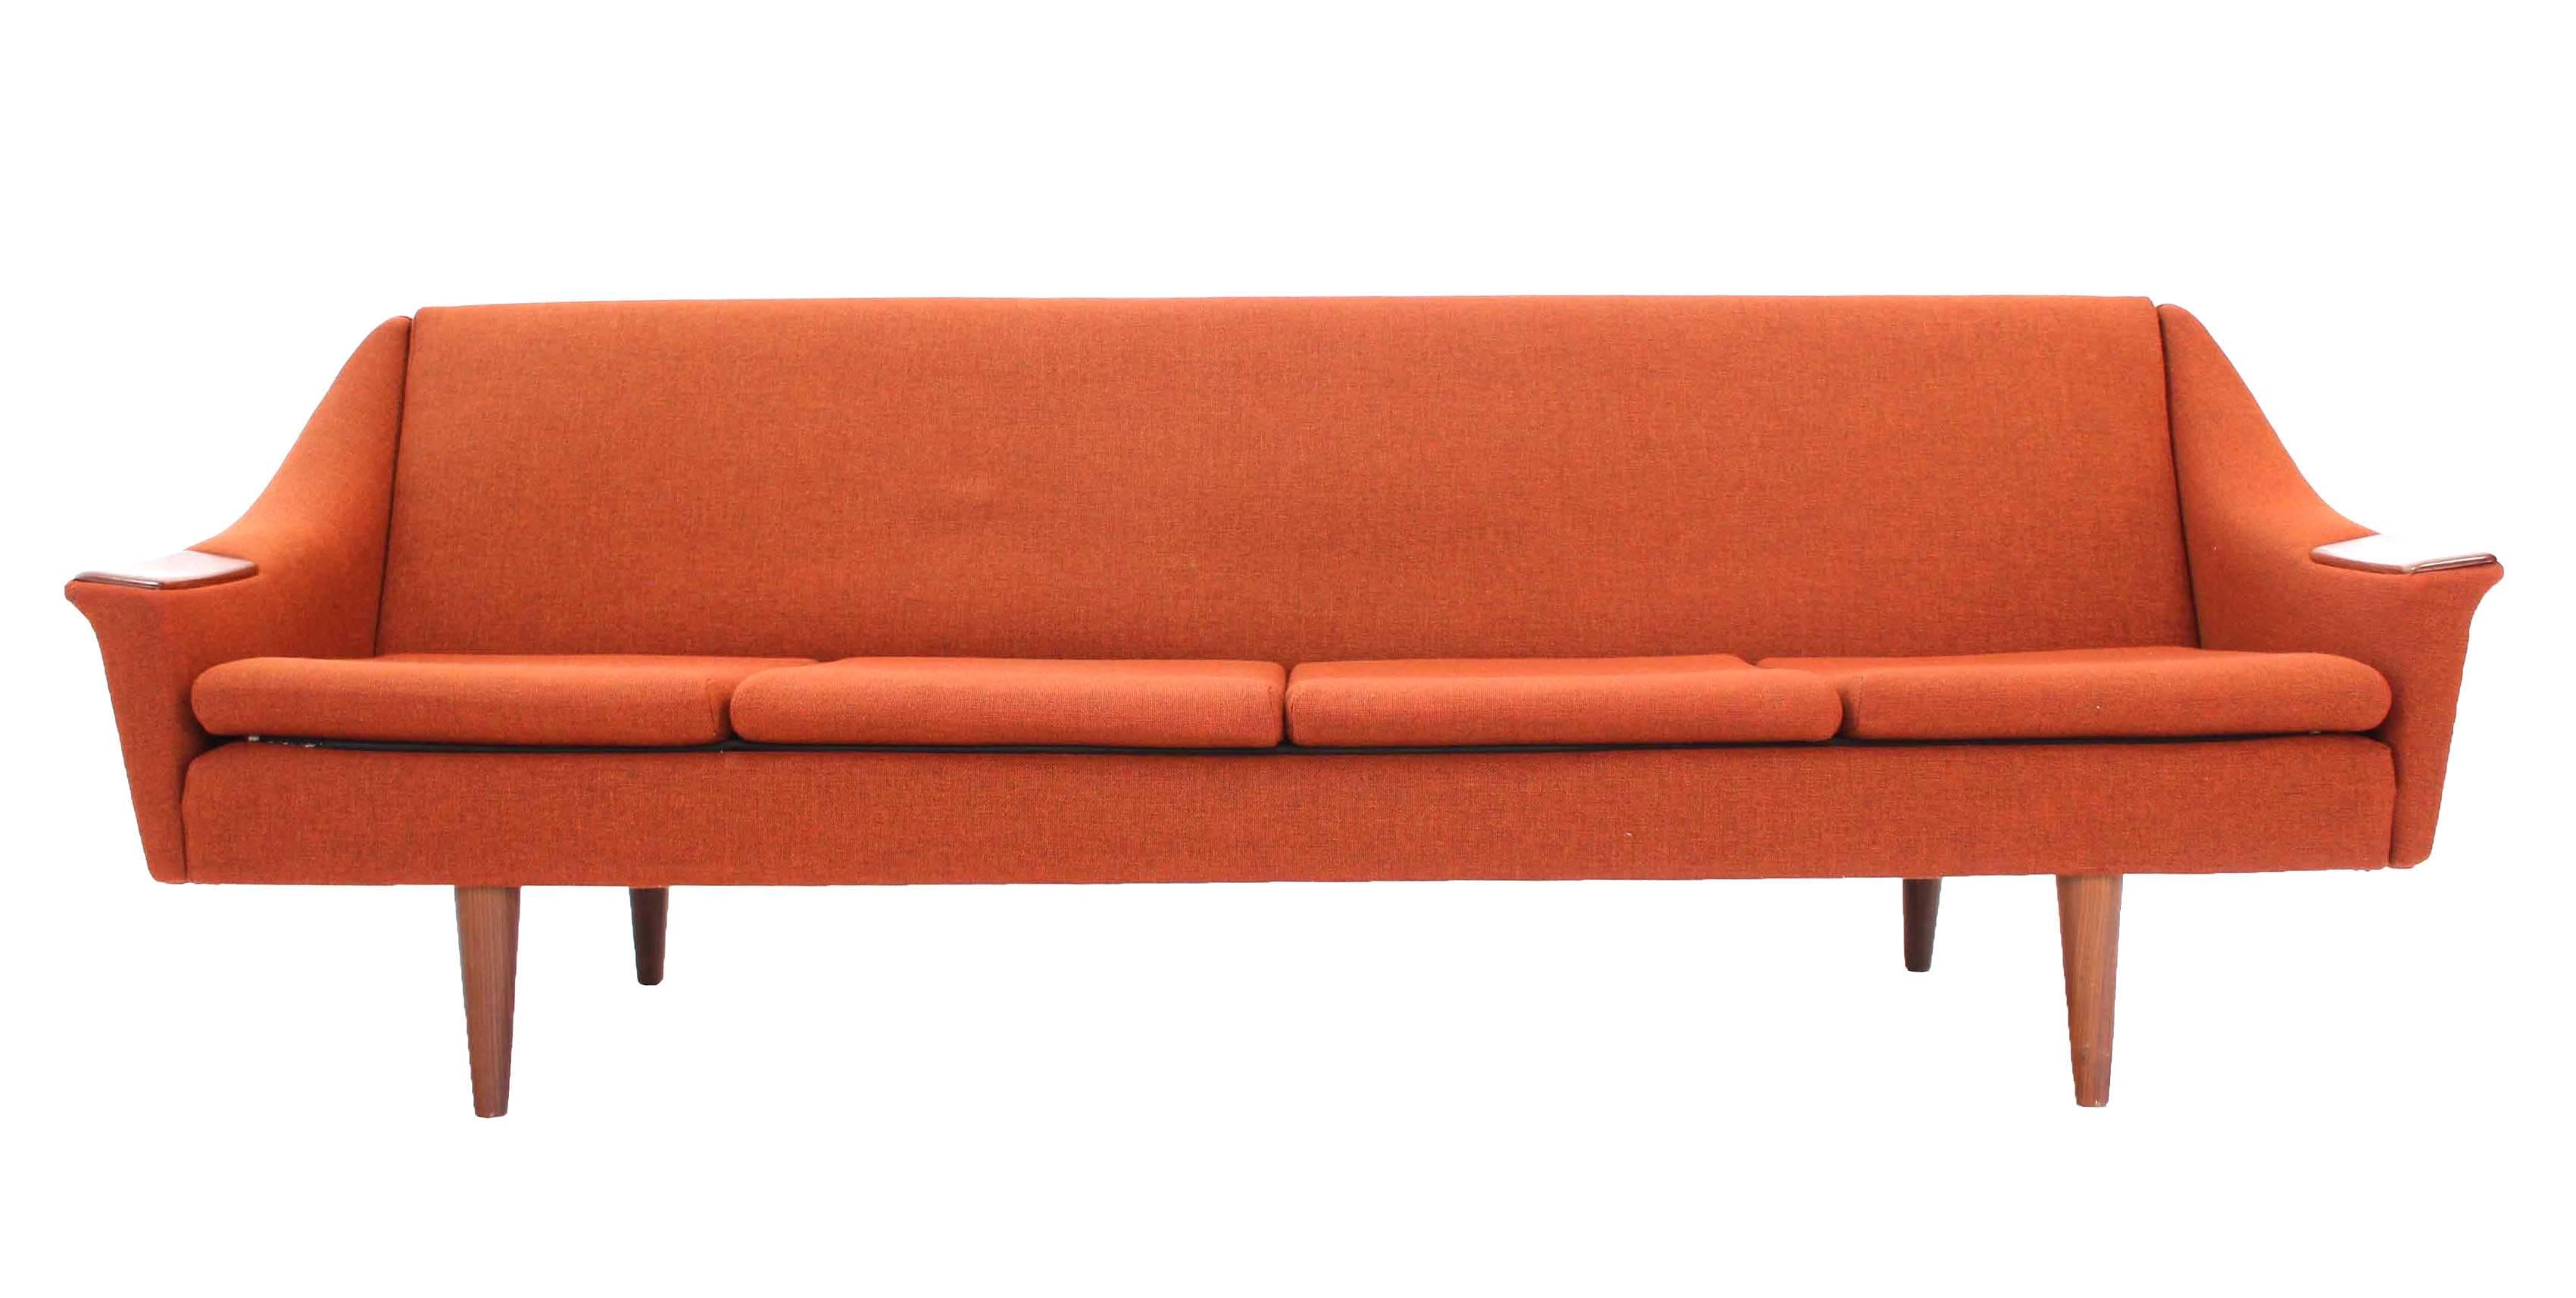 danish sofa bed